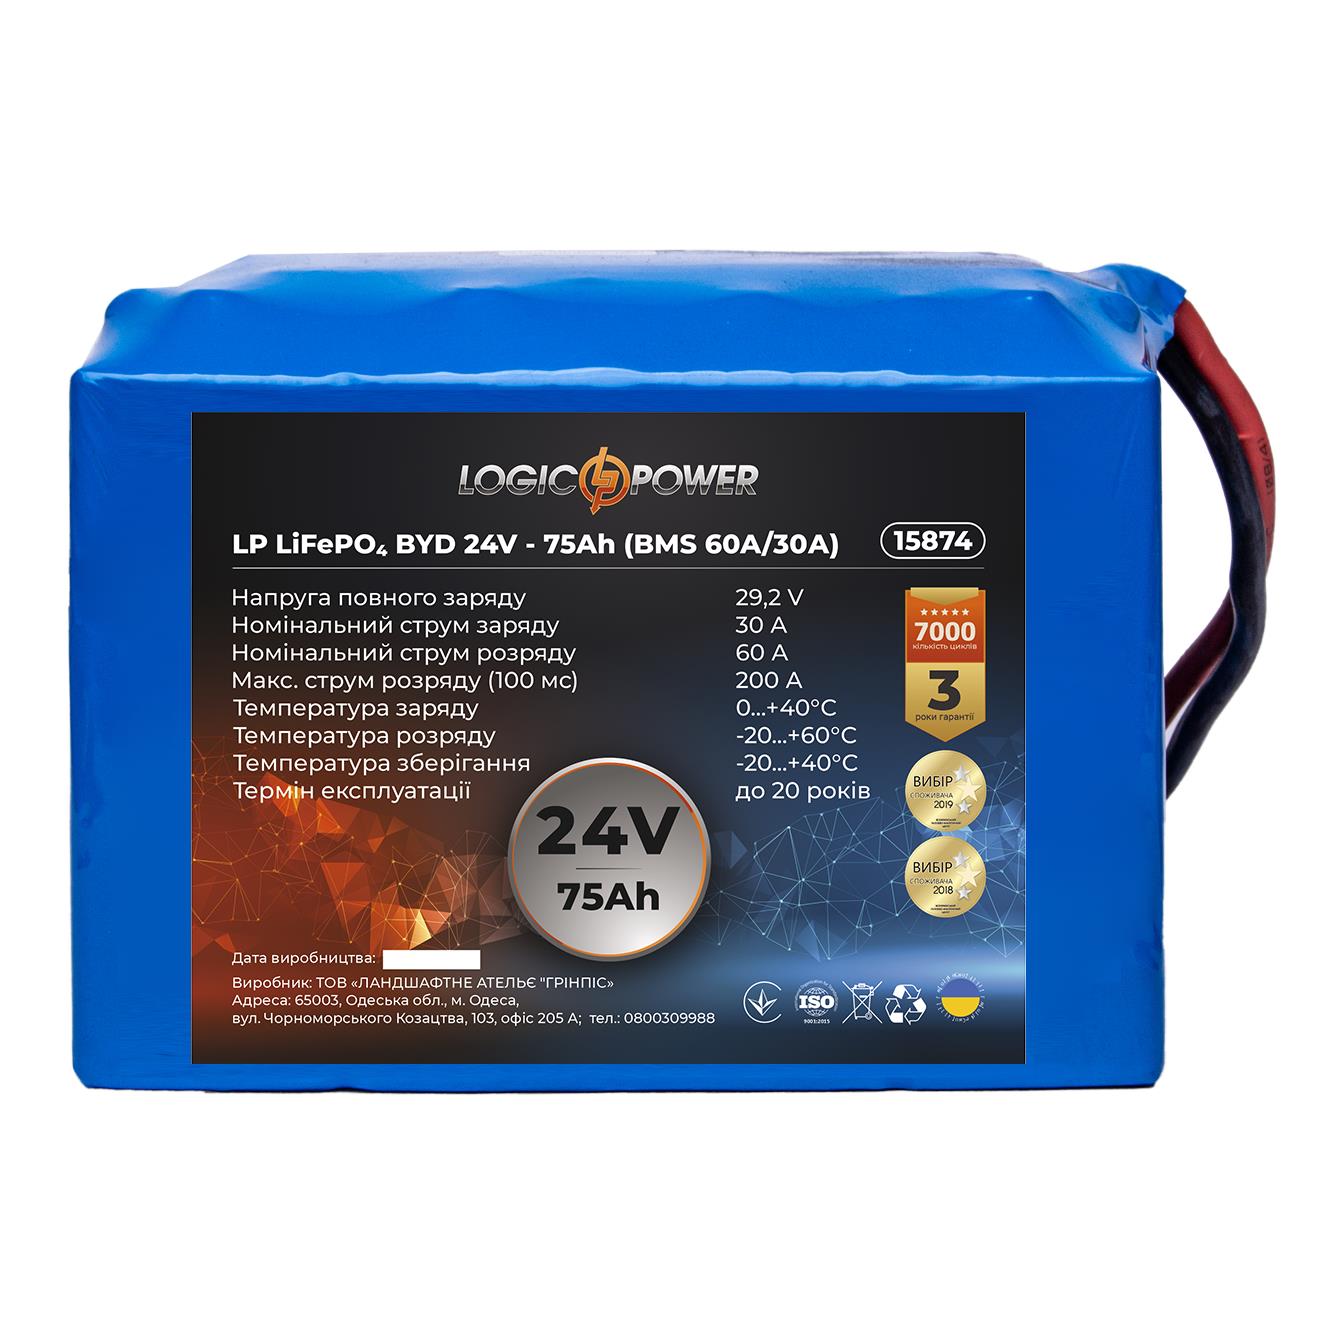 Аккумулятор 24 В LogicPower LP LiFePO4 BYD 24V - 75 Ah (BMS 60A/30A) (15874)